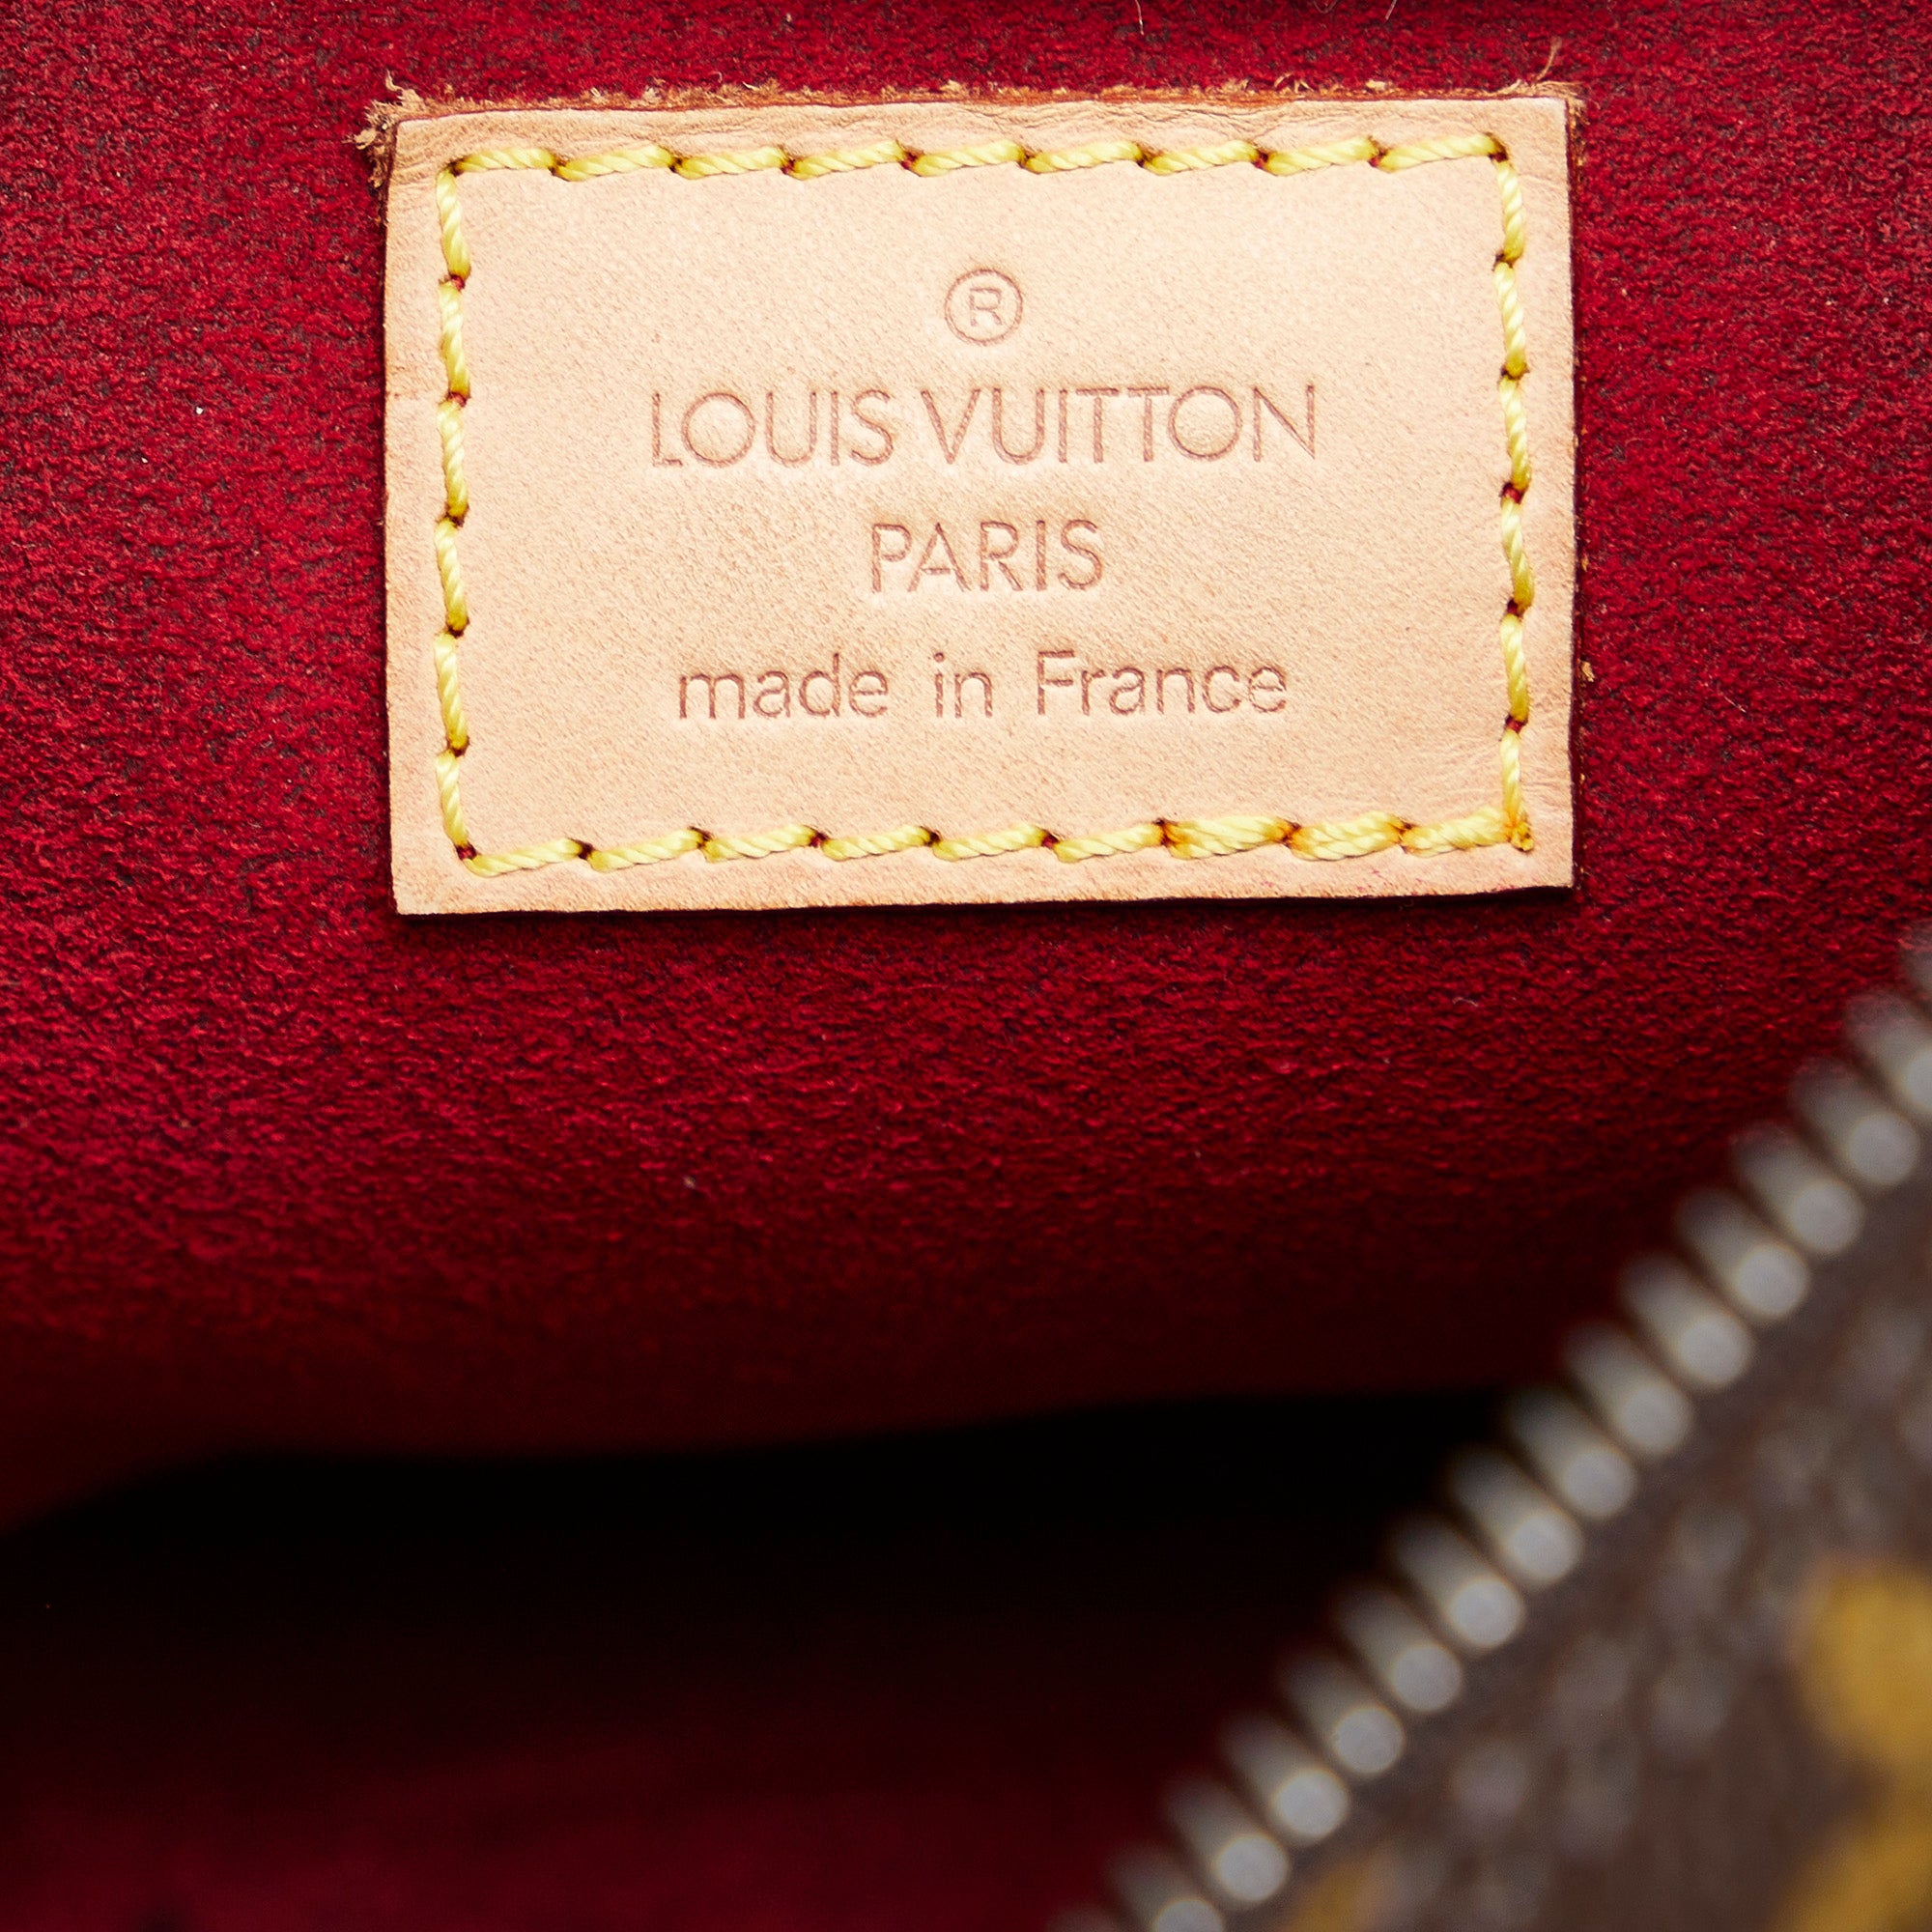 Preloved Louis Vuitton Monogram Croissant MM Bag 040323